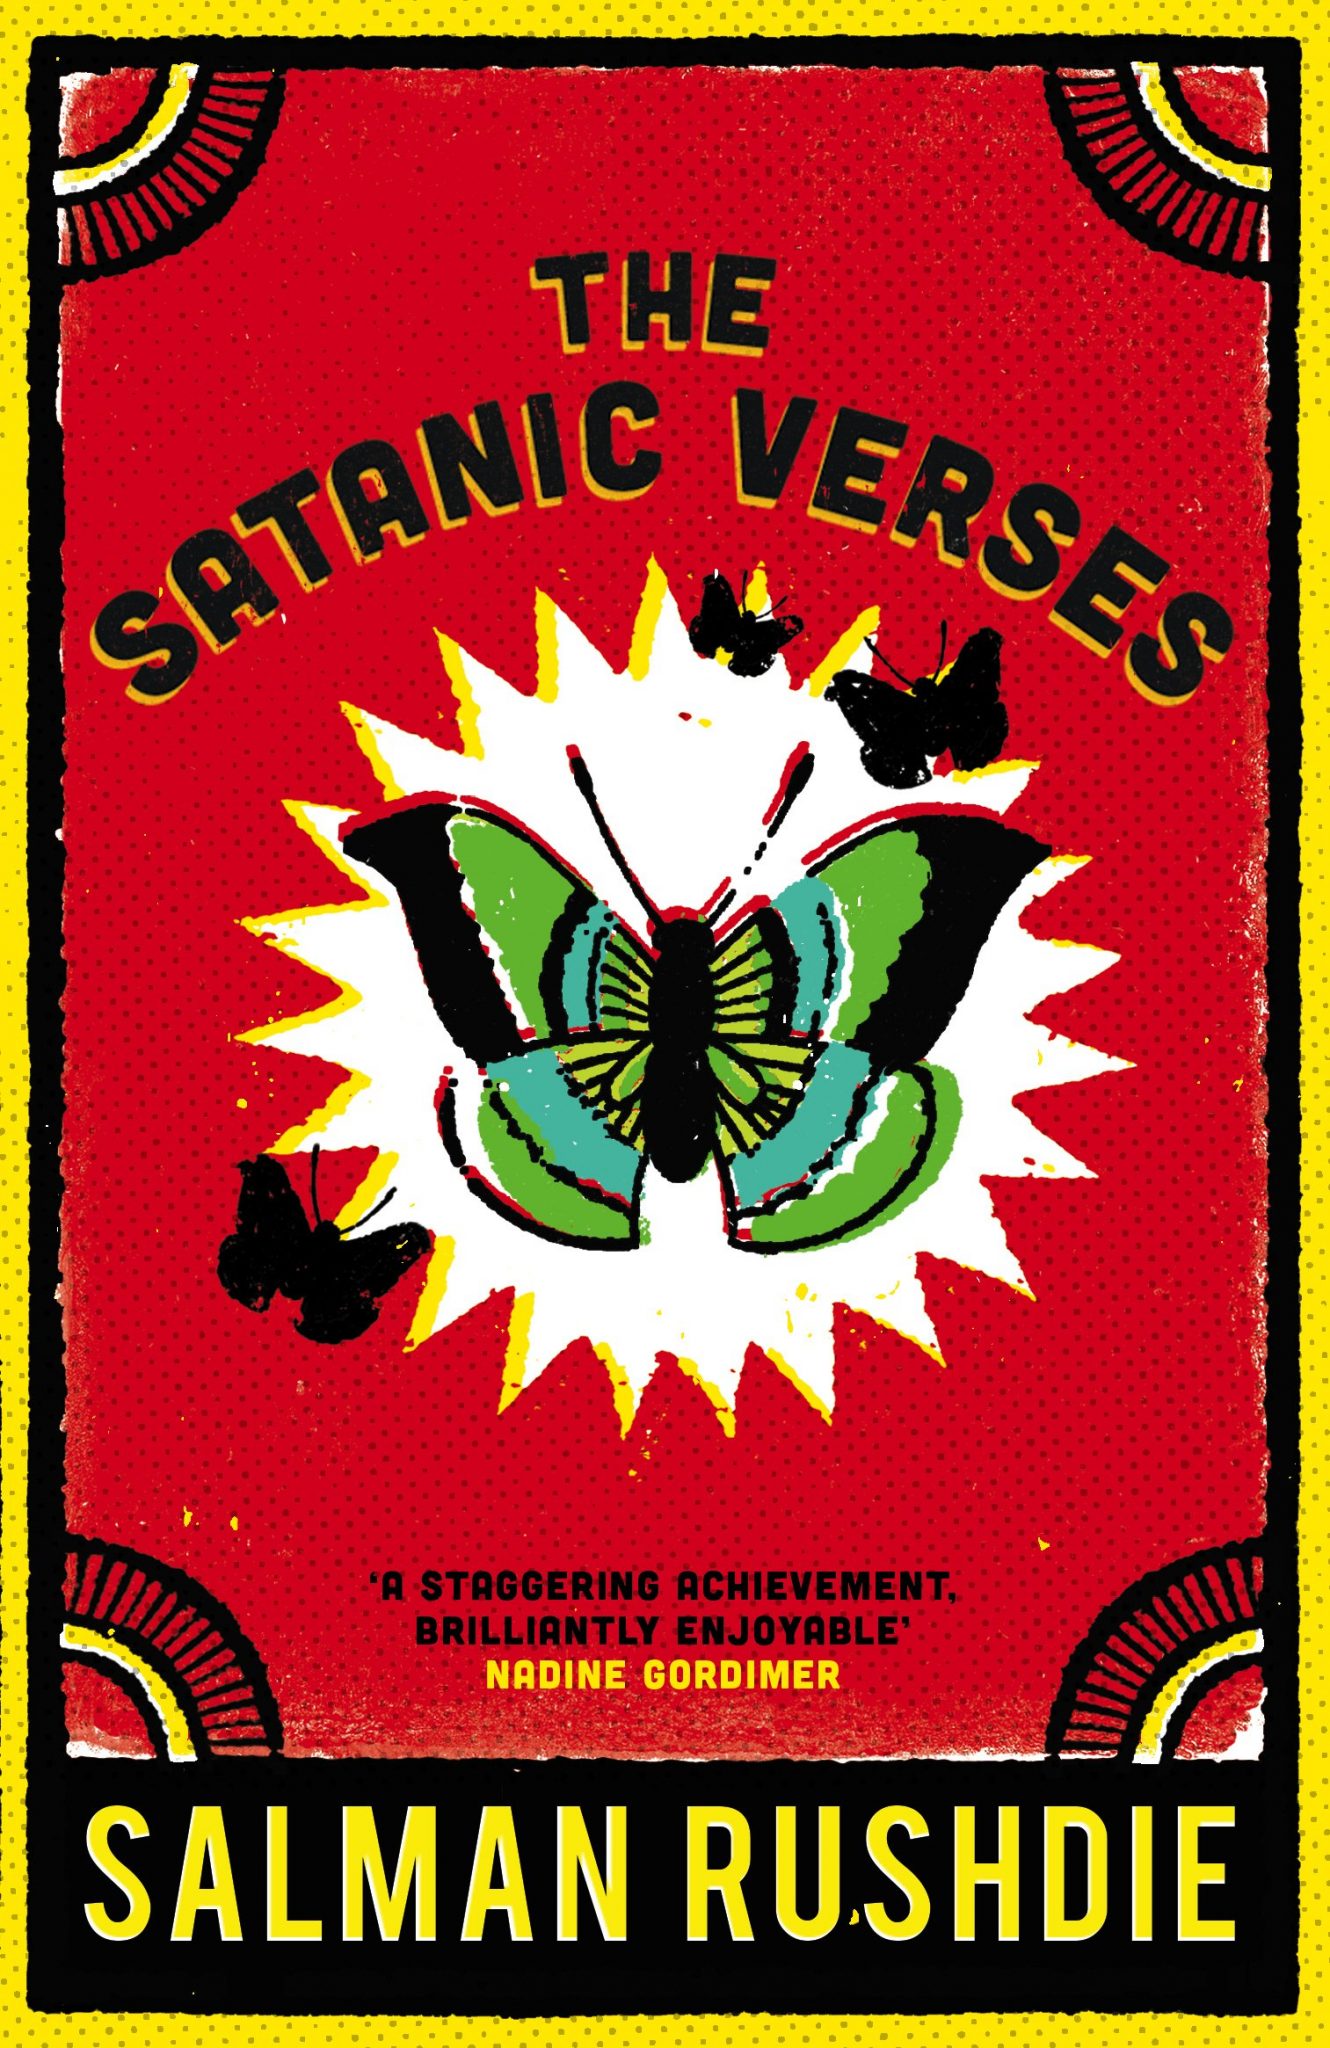 the satanic verses book buy